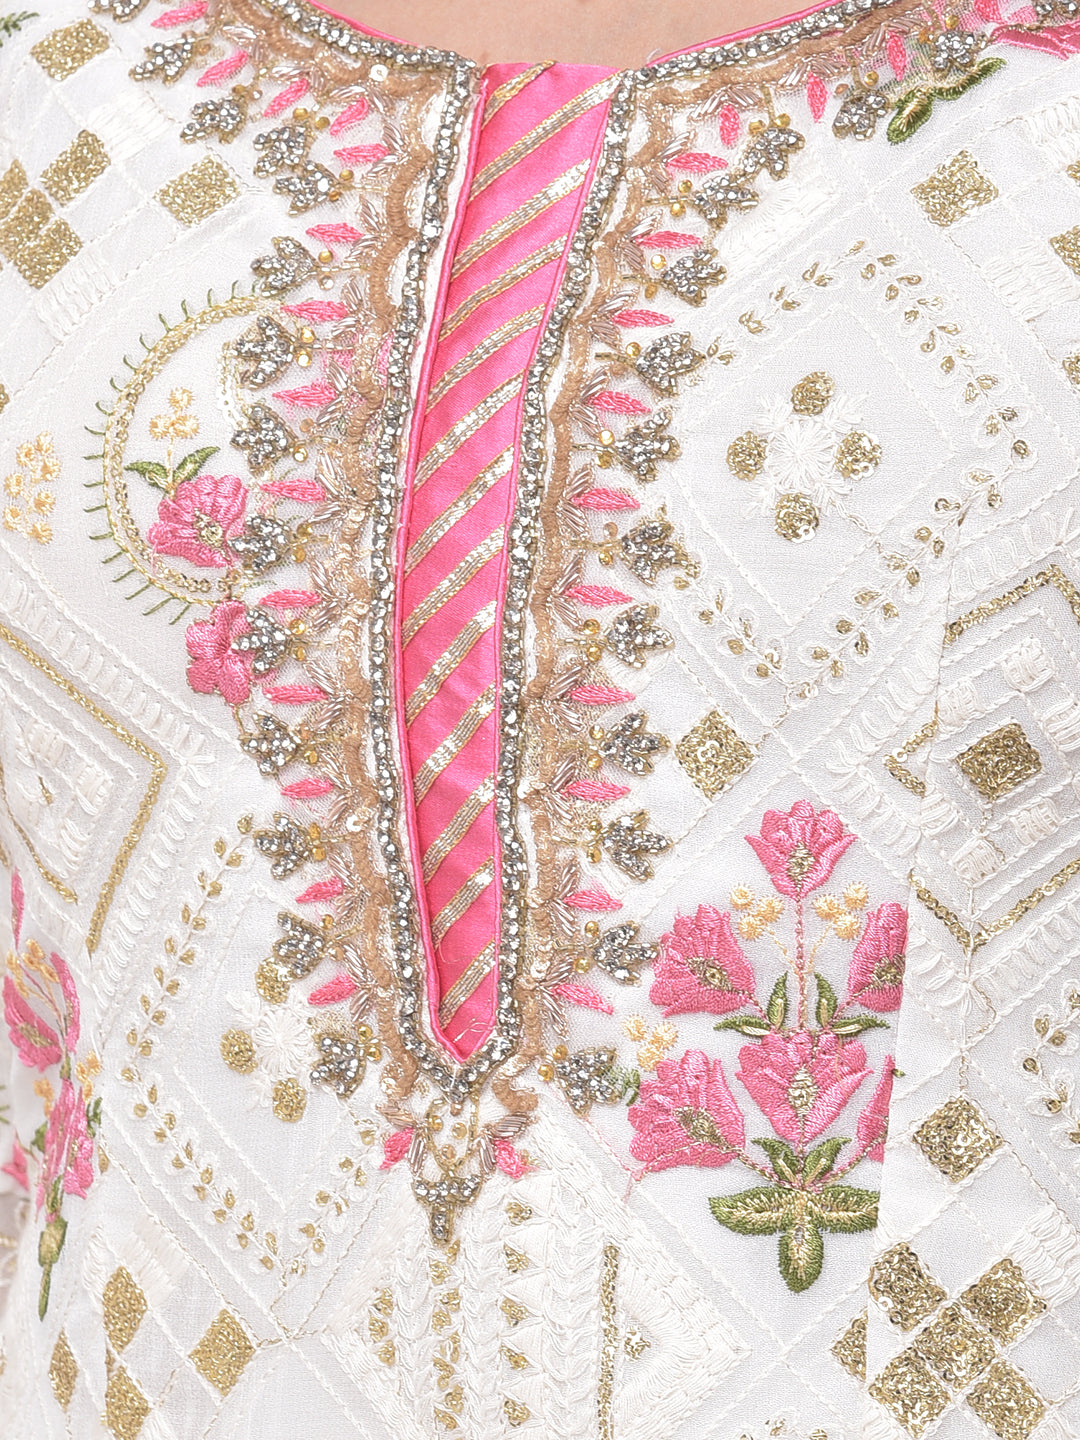 Neeru'S Off White Color Georgette Fabric Suit-Gharara